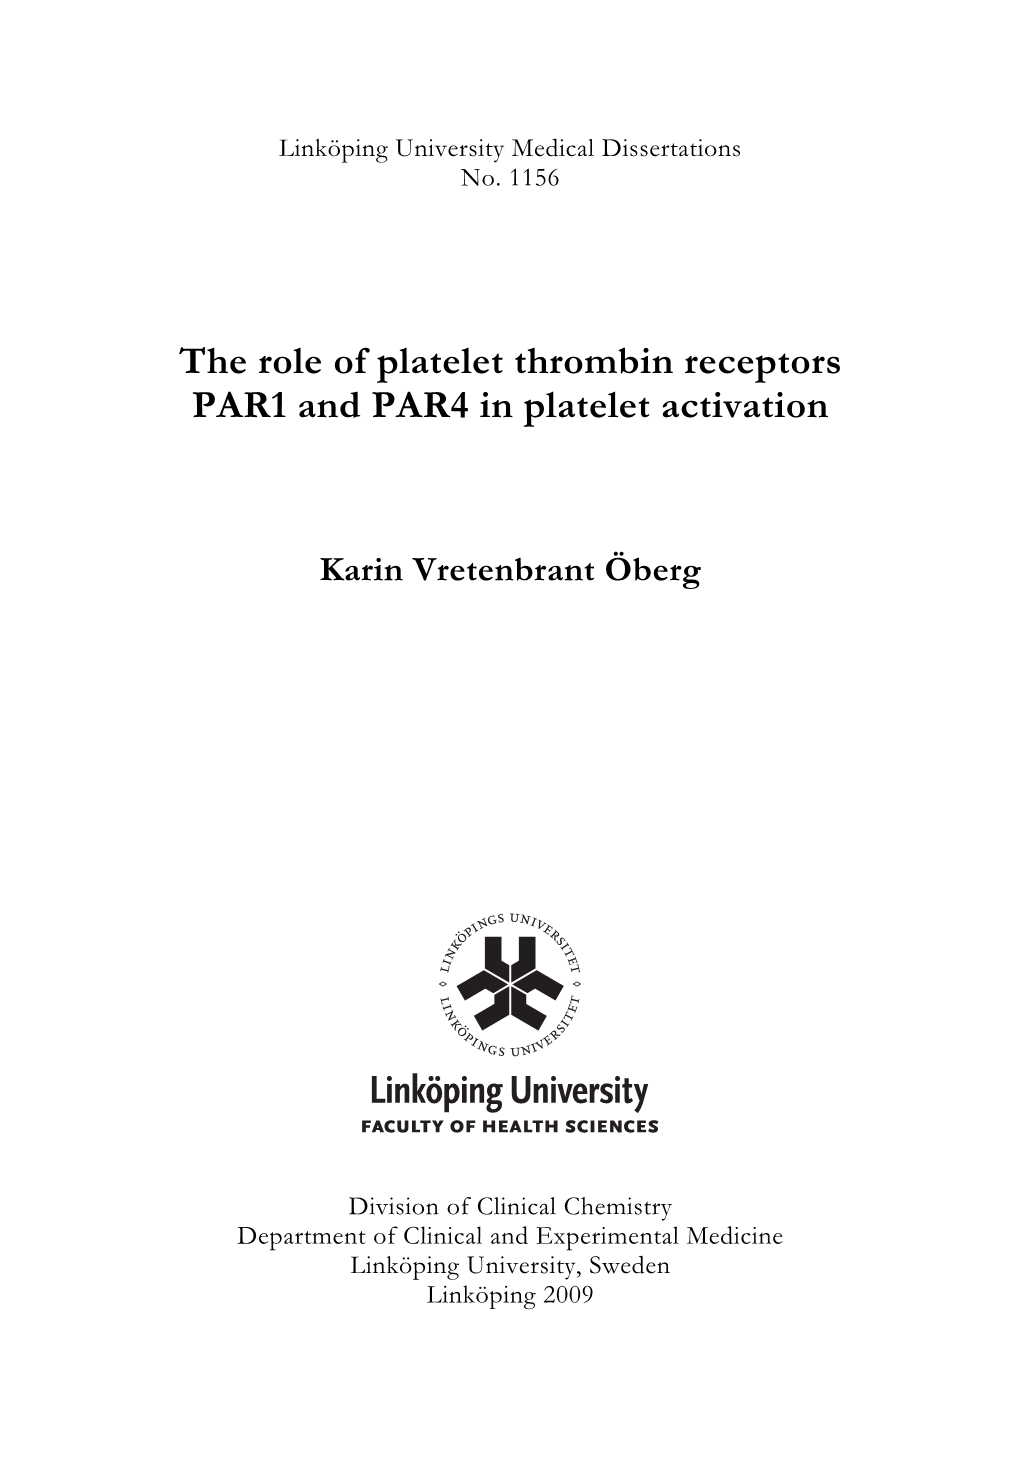 The Role of Platelet Thrombin Receptors PAR1 and PAR4 in Platelet Activation